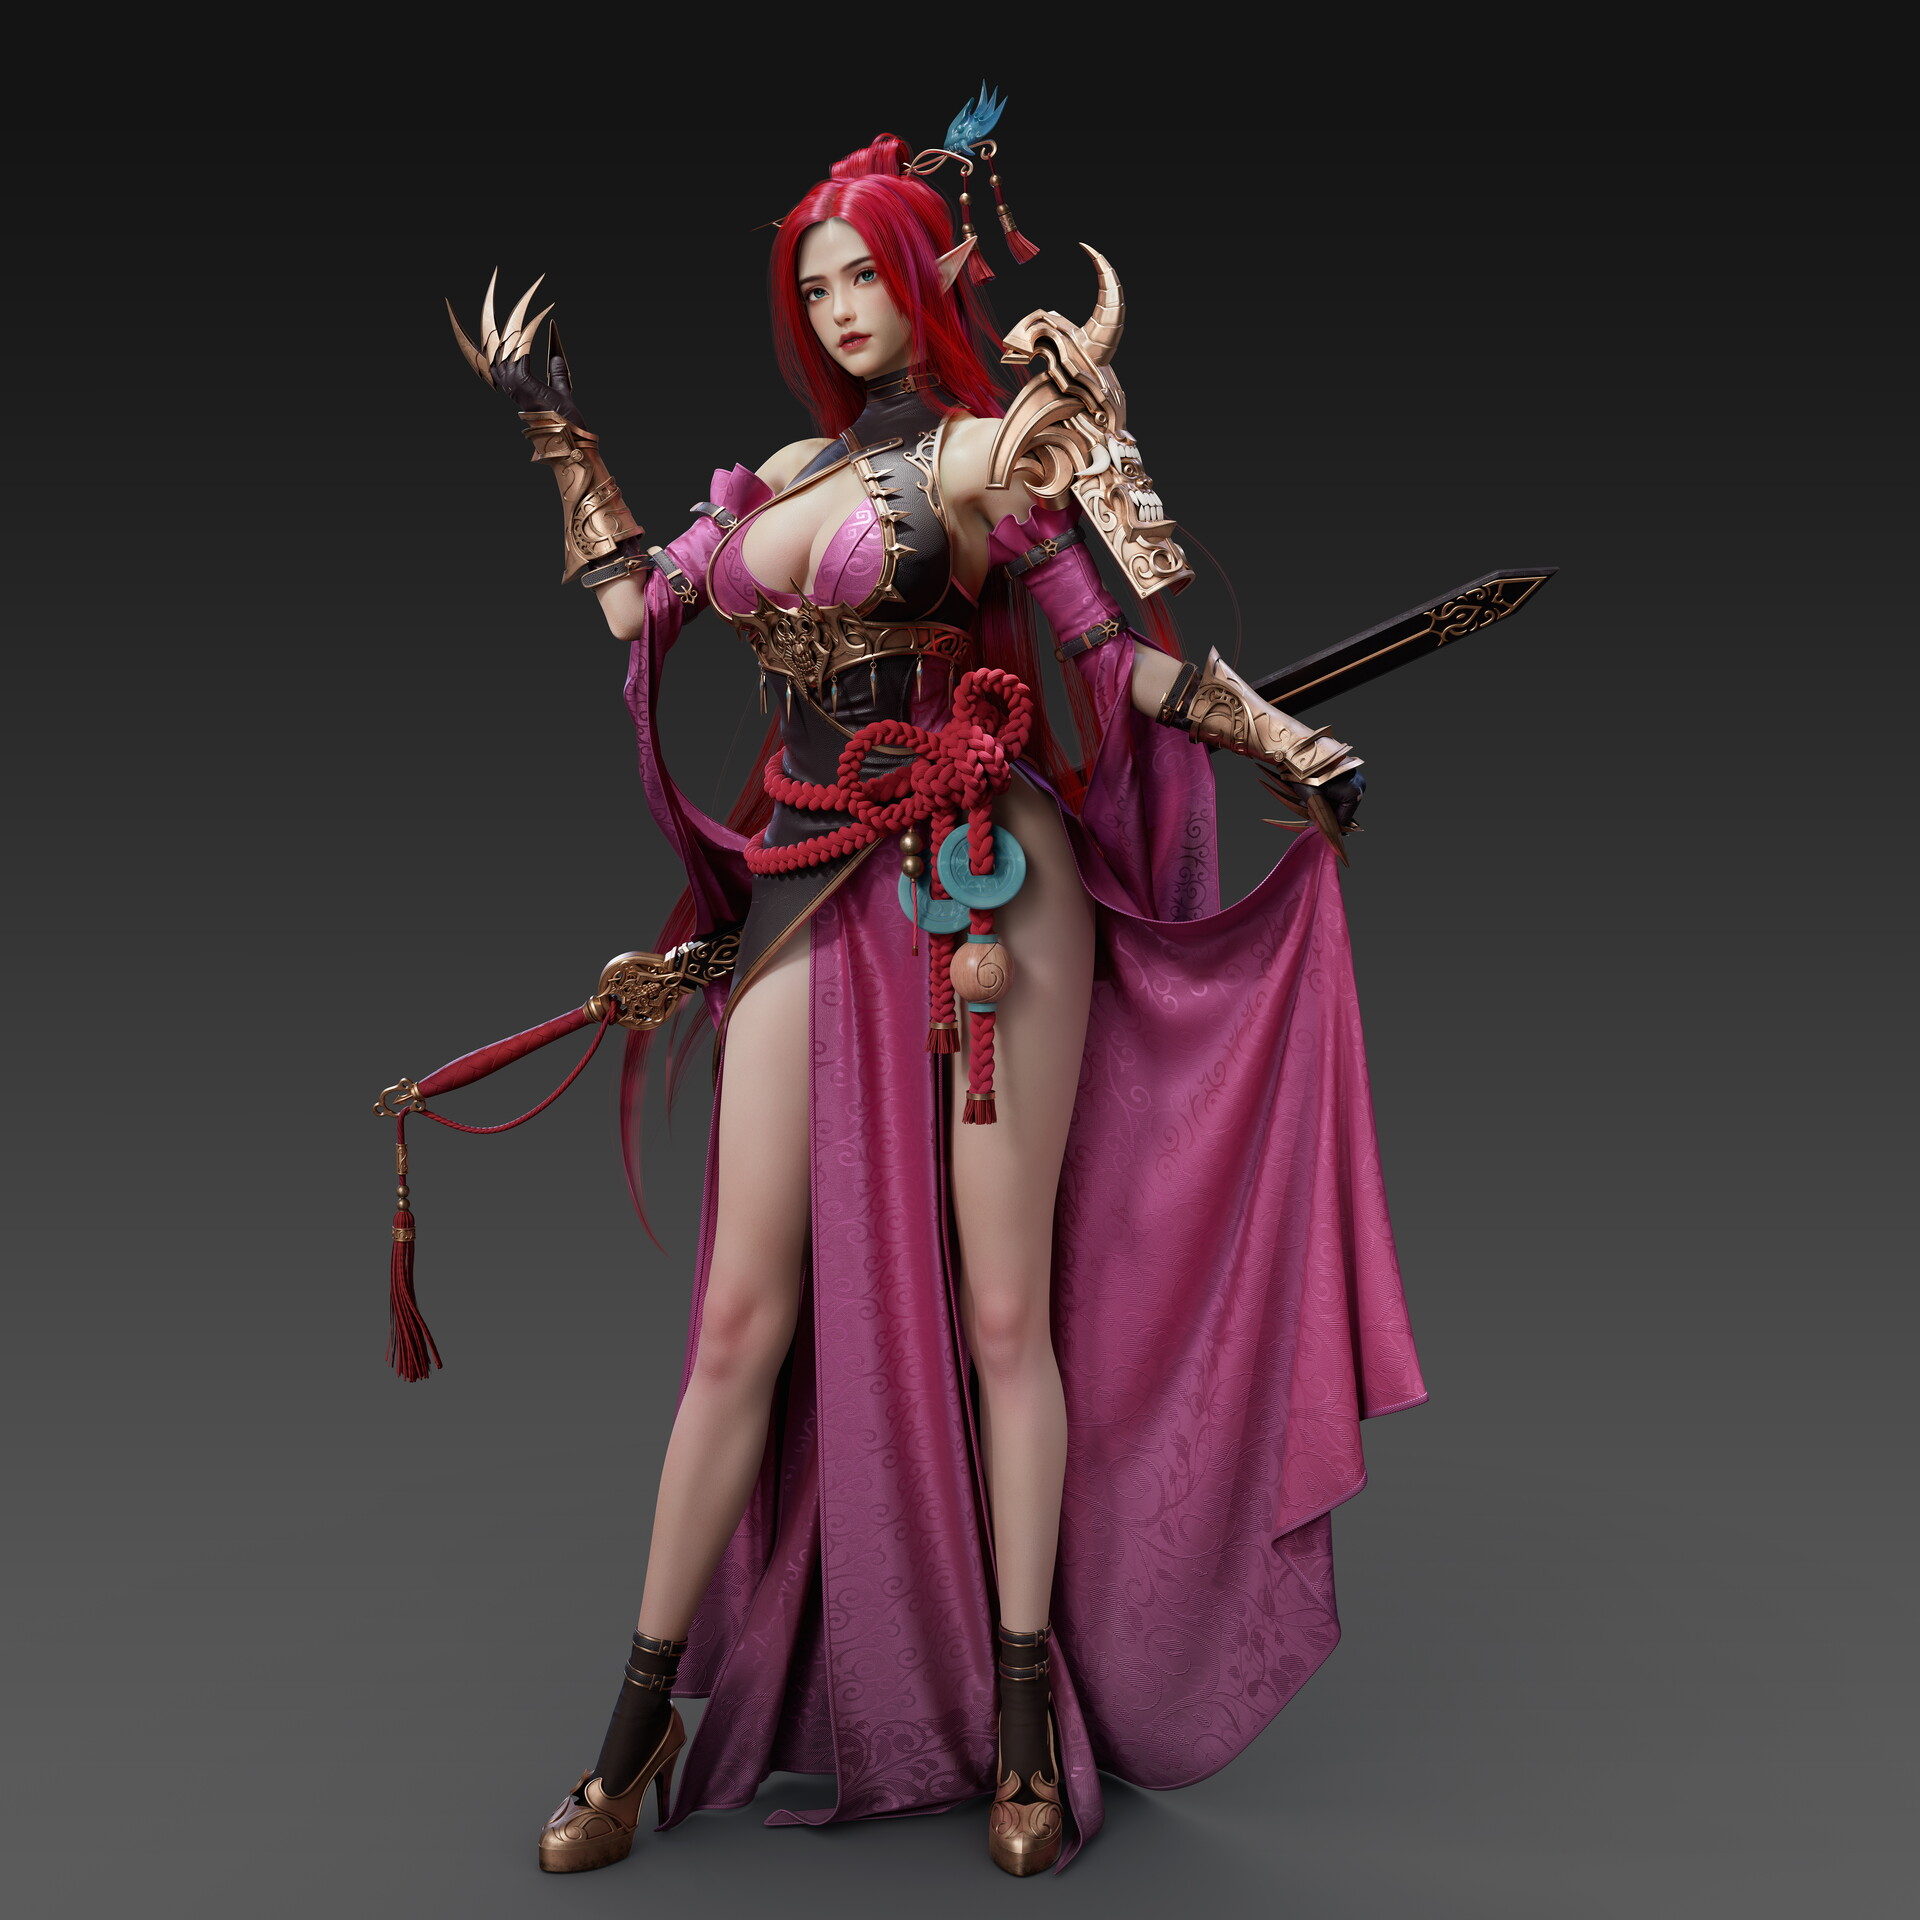 General 1920x1920 Ma Chui Chui CGI women redhead pink dress cleavage sword simple background lifting clothes minimalism big boobs heels pointy ears